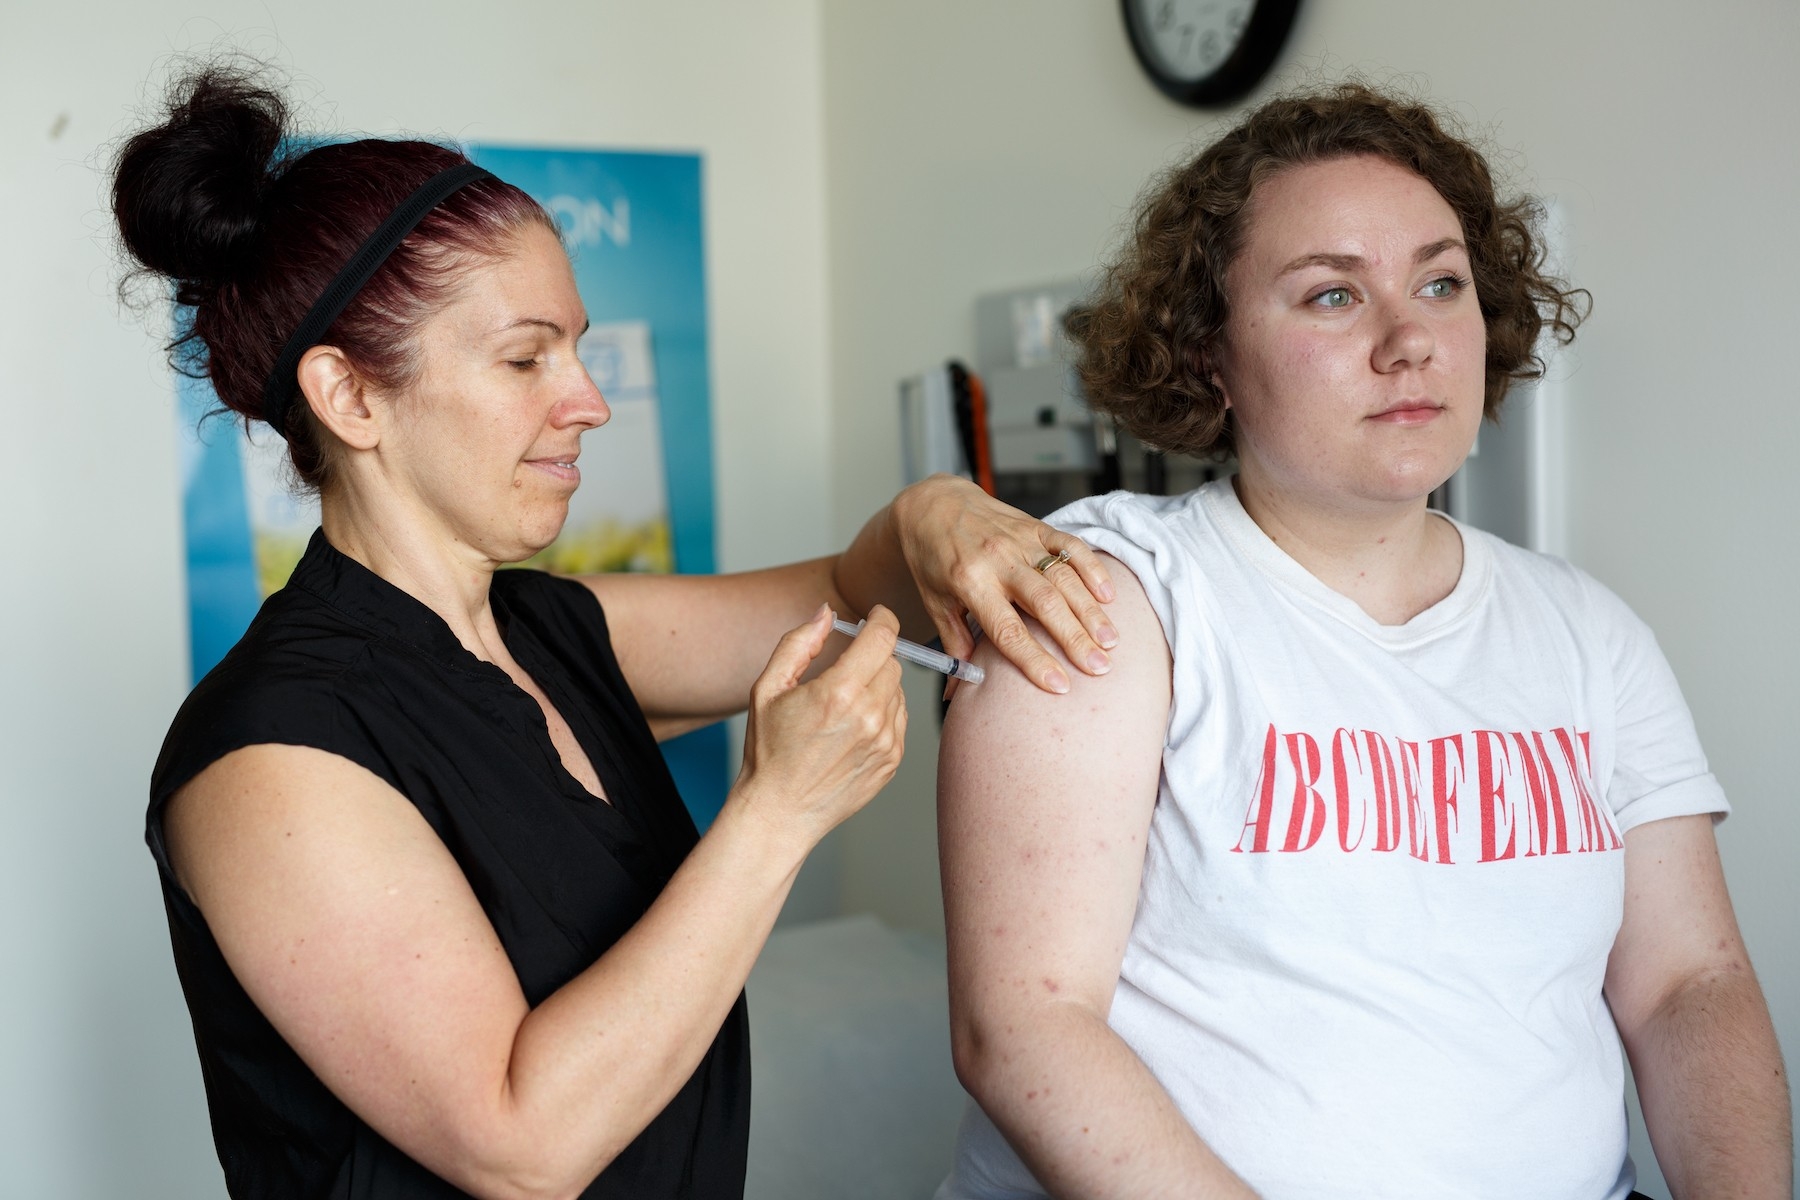 Nurse gives student vaccine